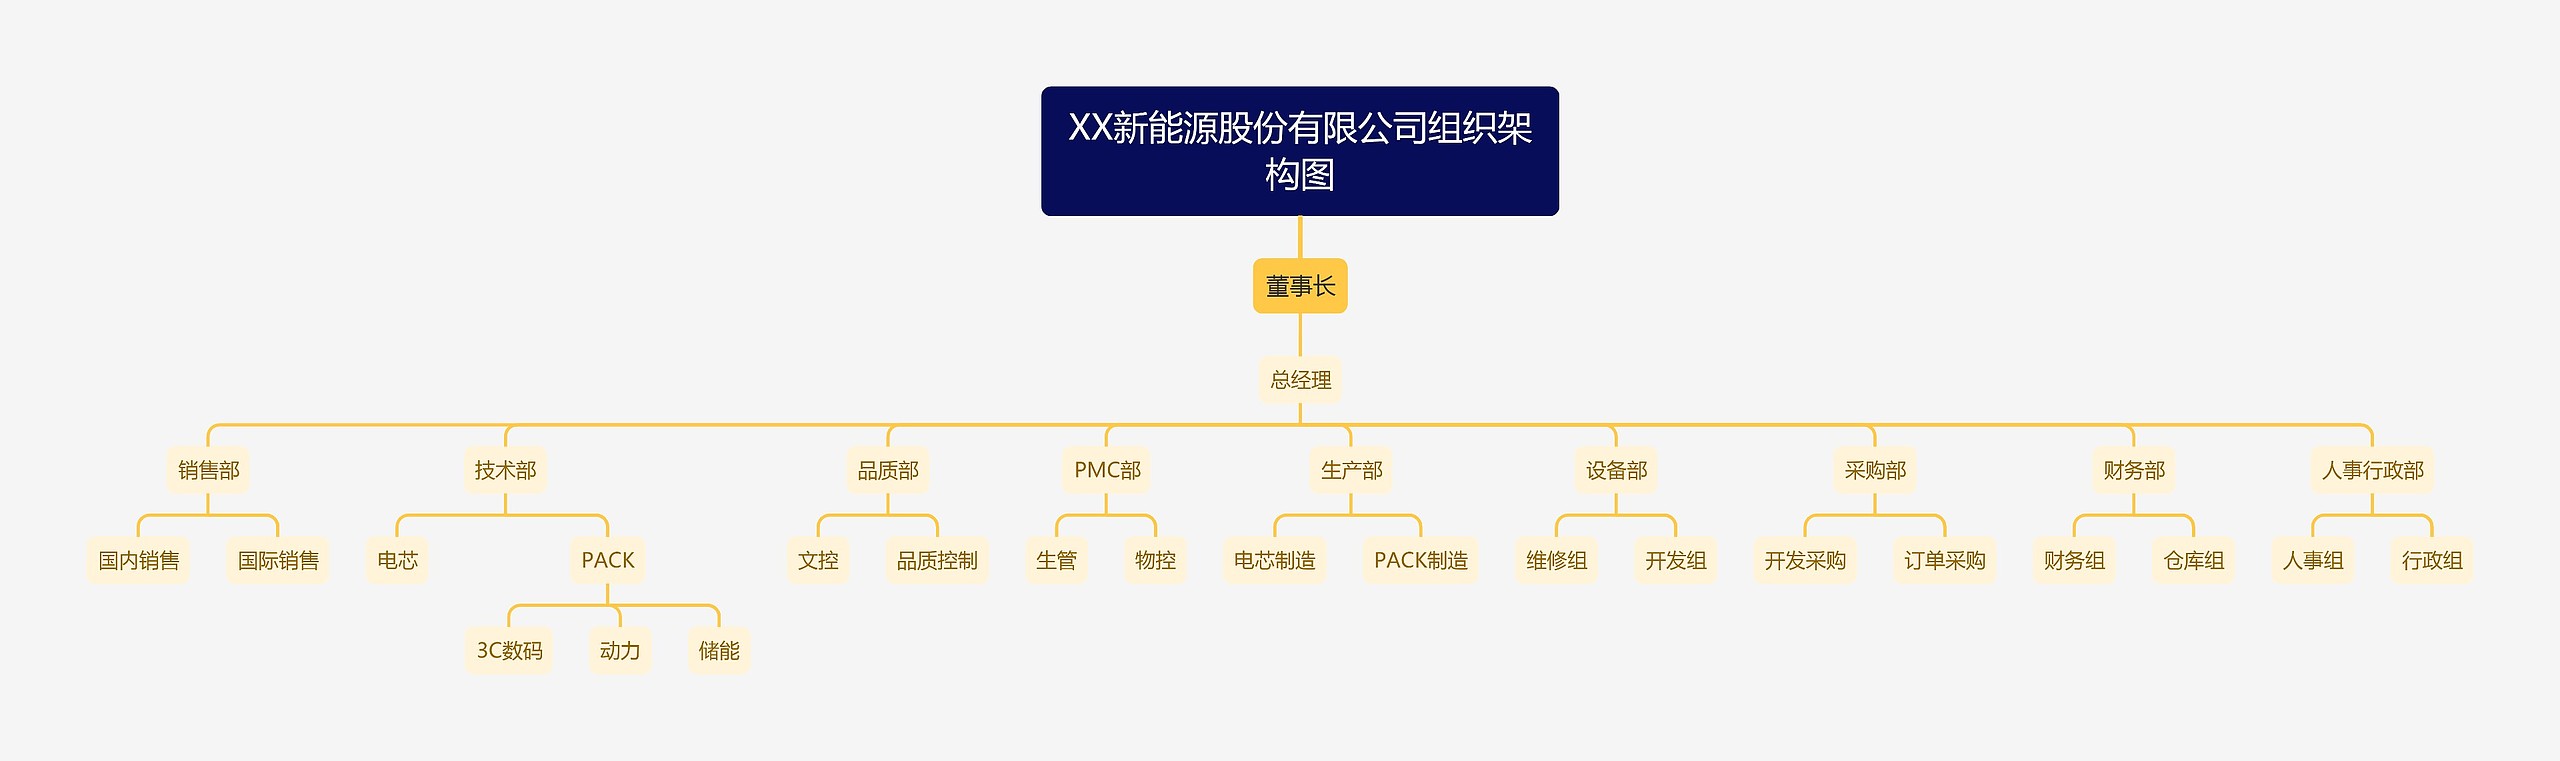 XX新能源股份有限公司组织架构图